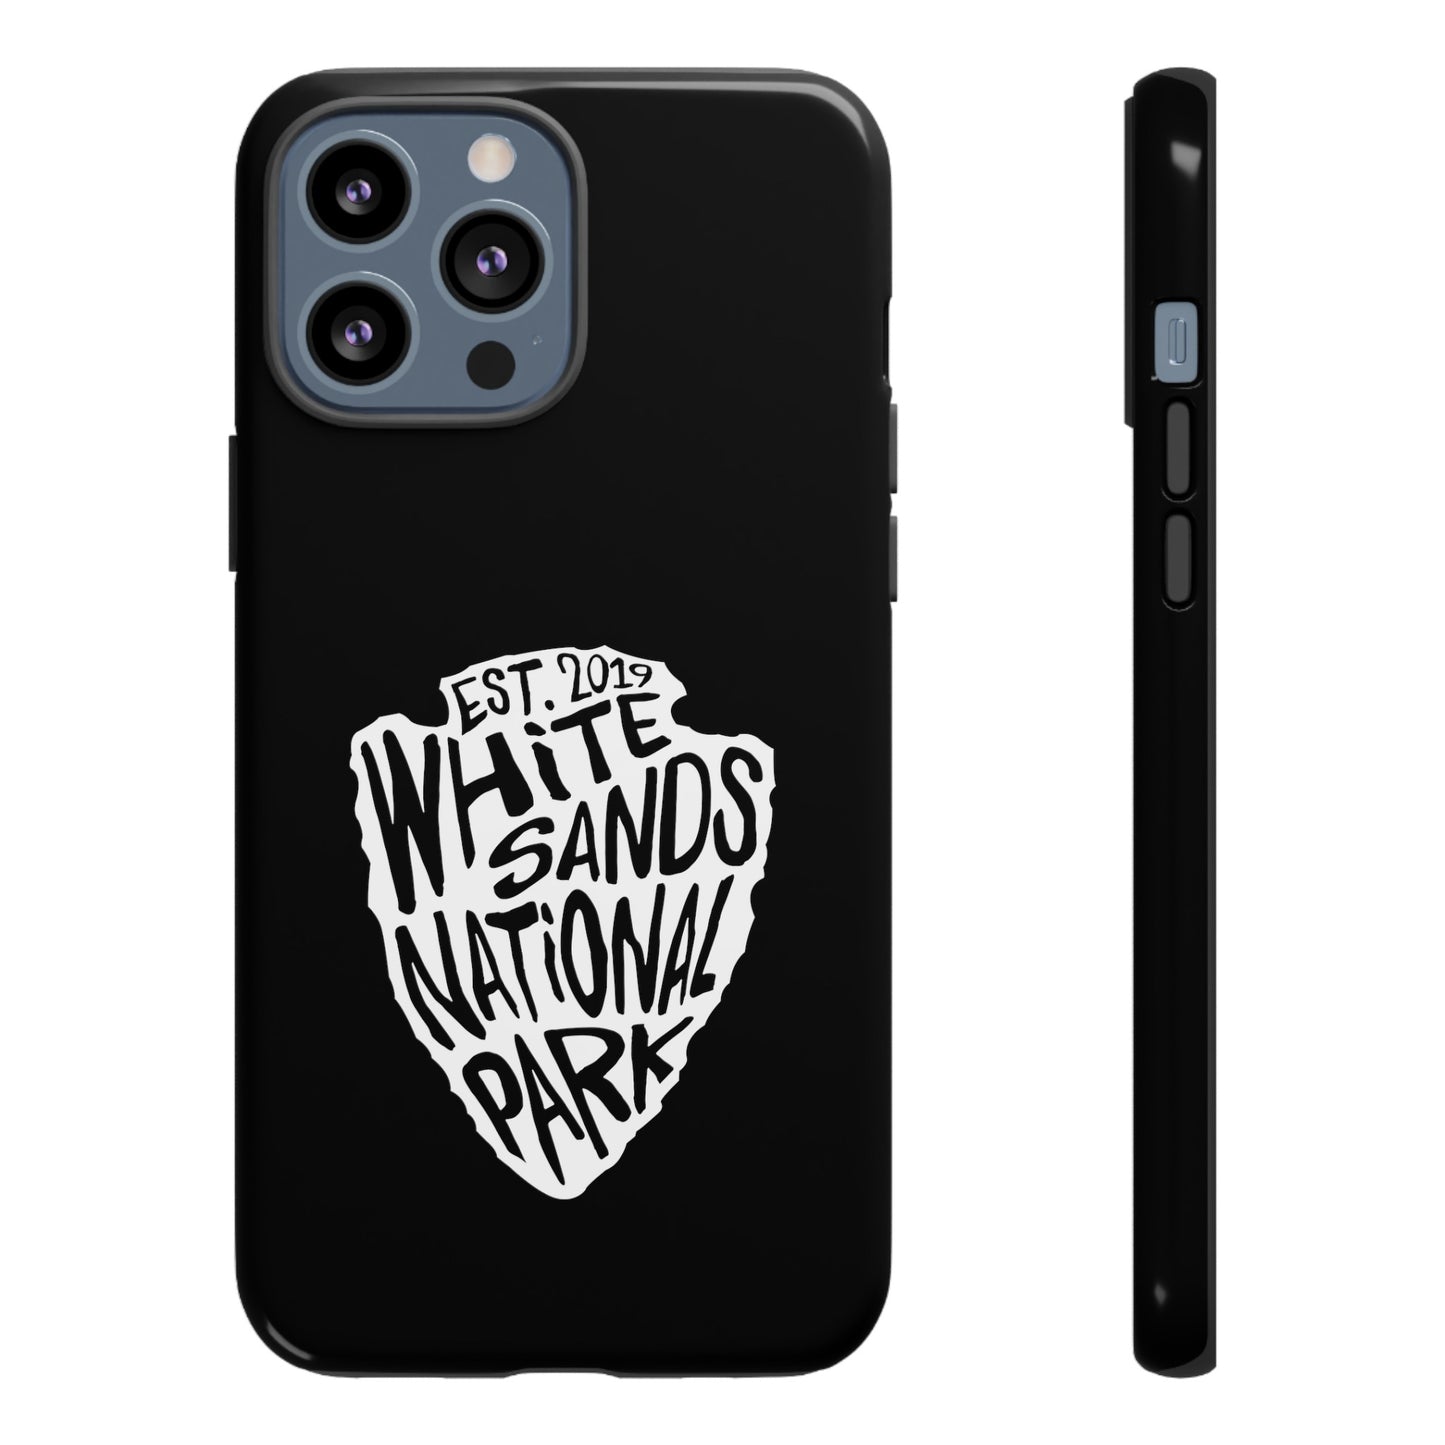 White Sands National Park Phone Case - Arrowhead Design